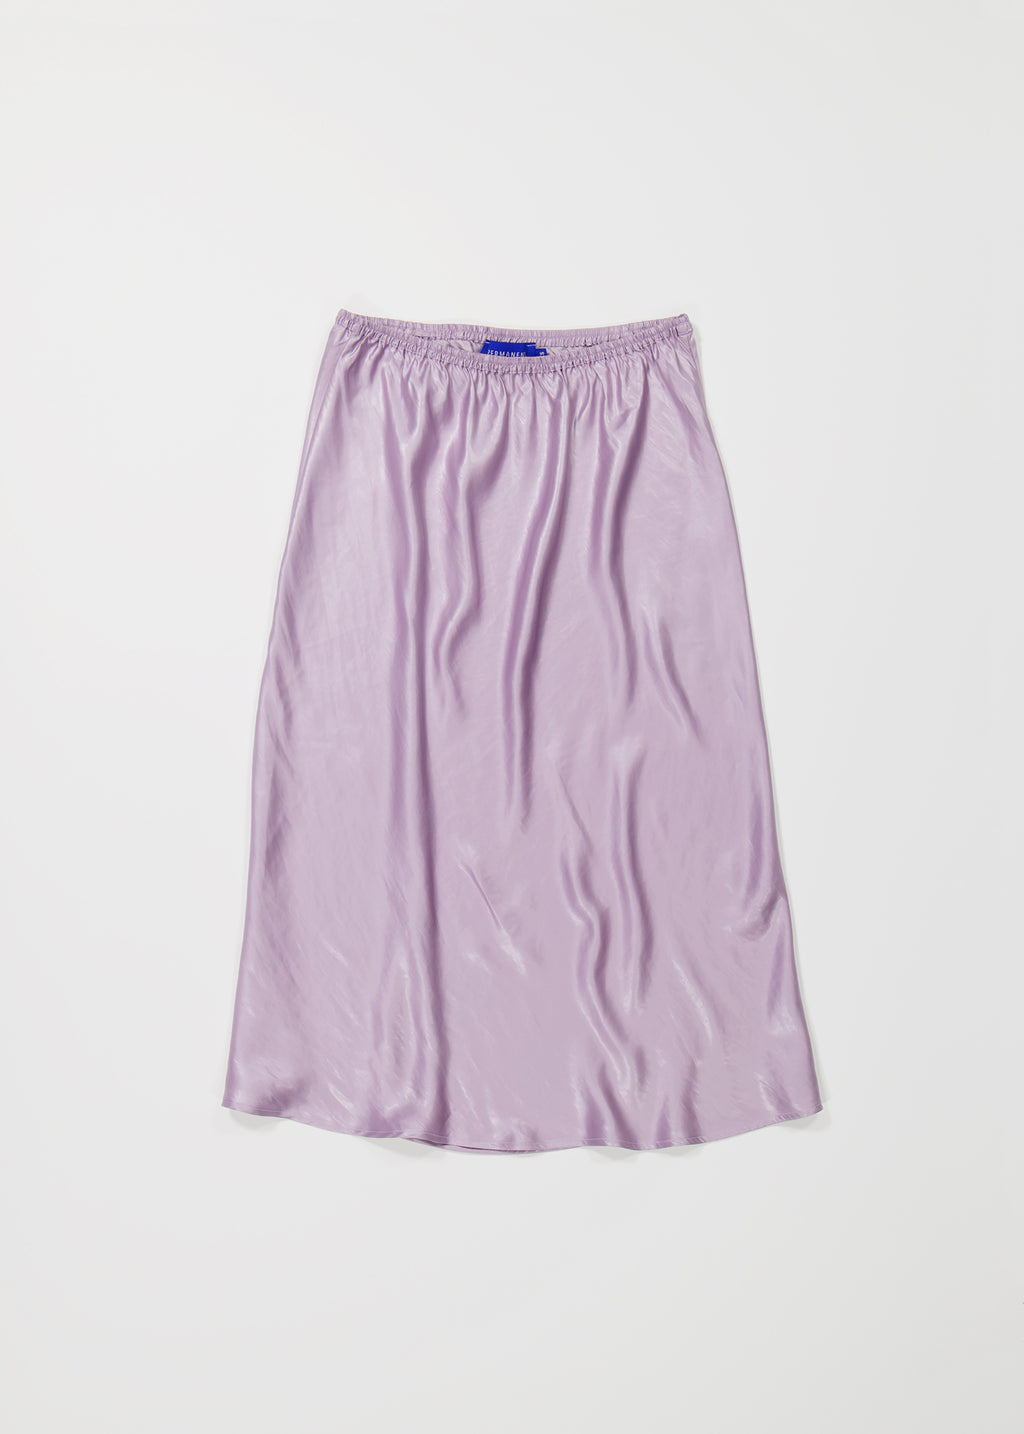 Diaz Skirt ~ Lilac